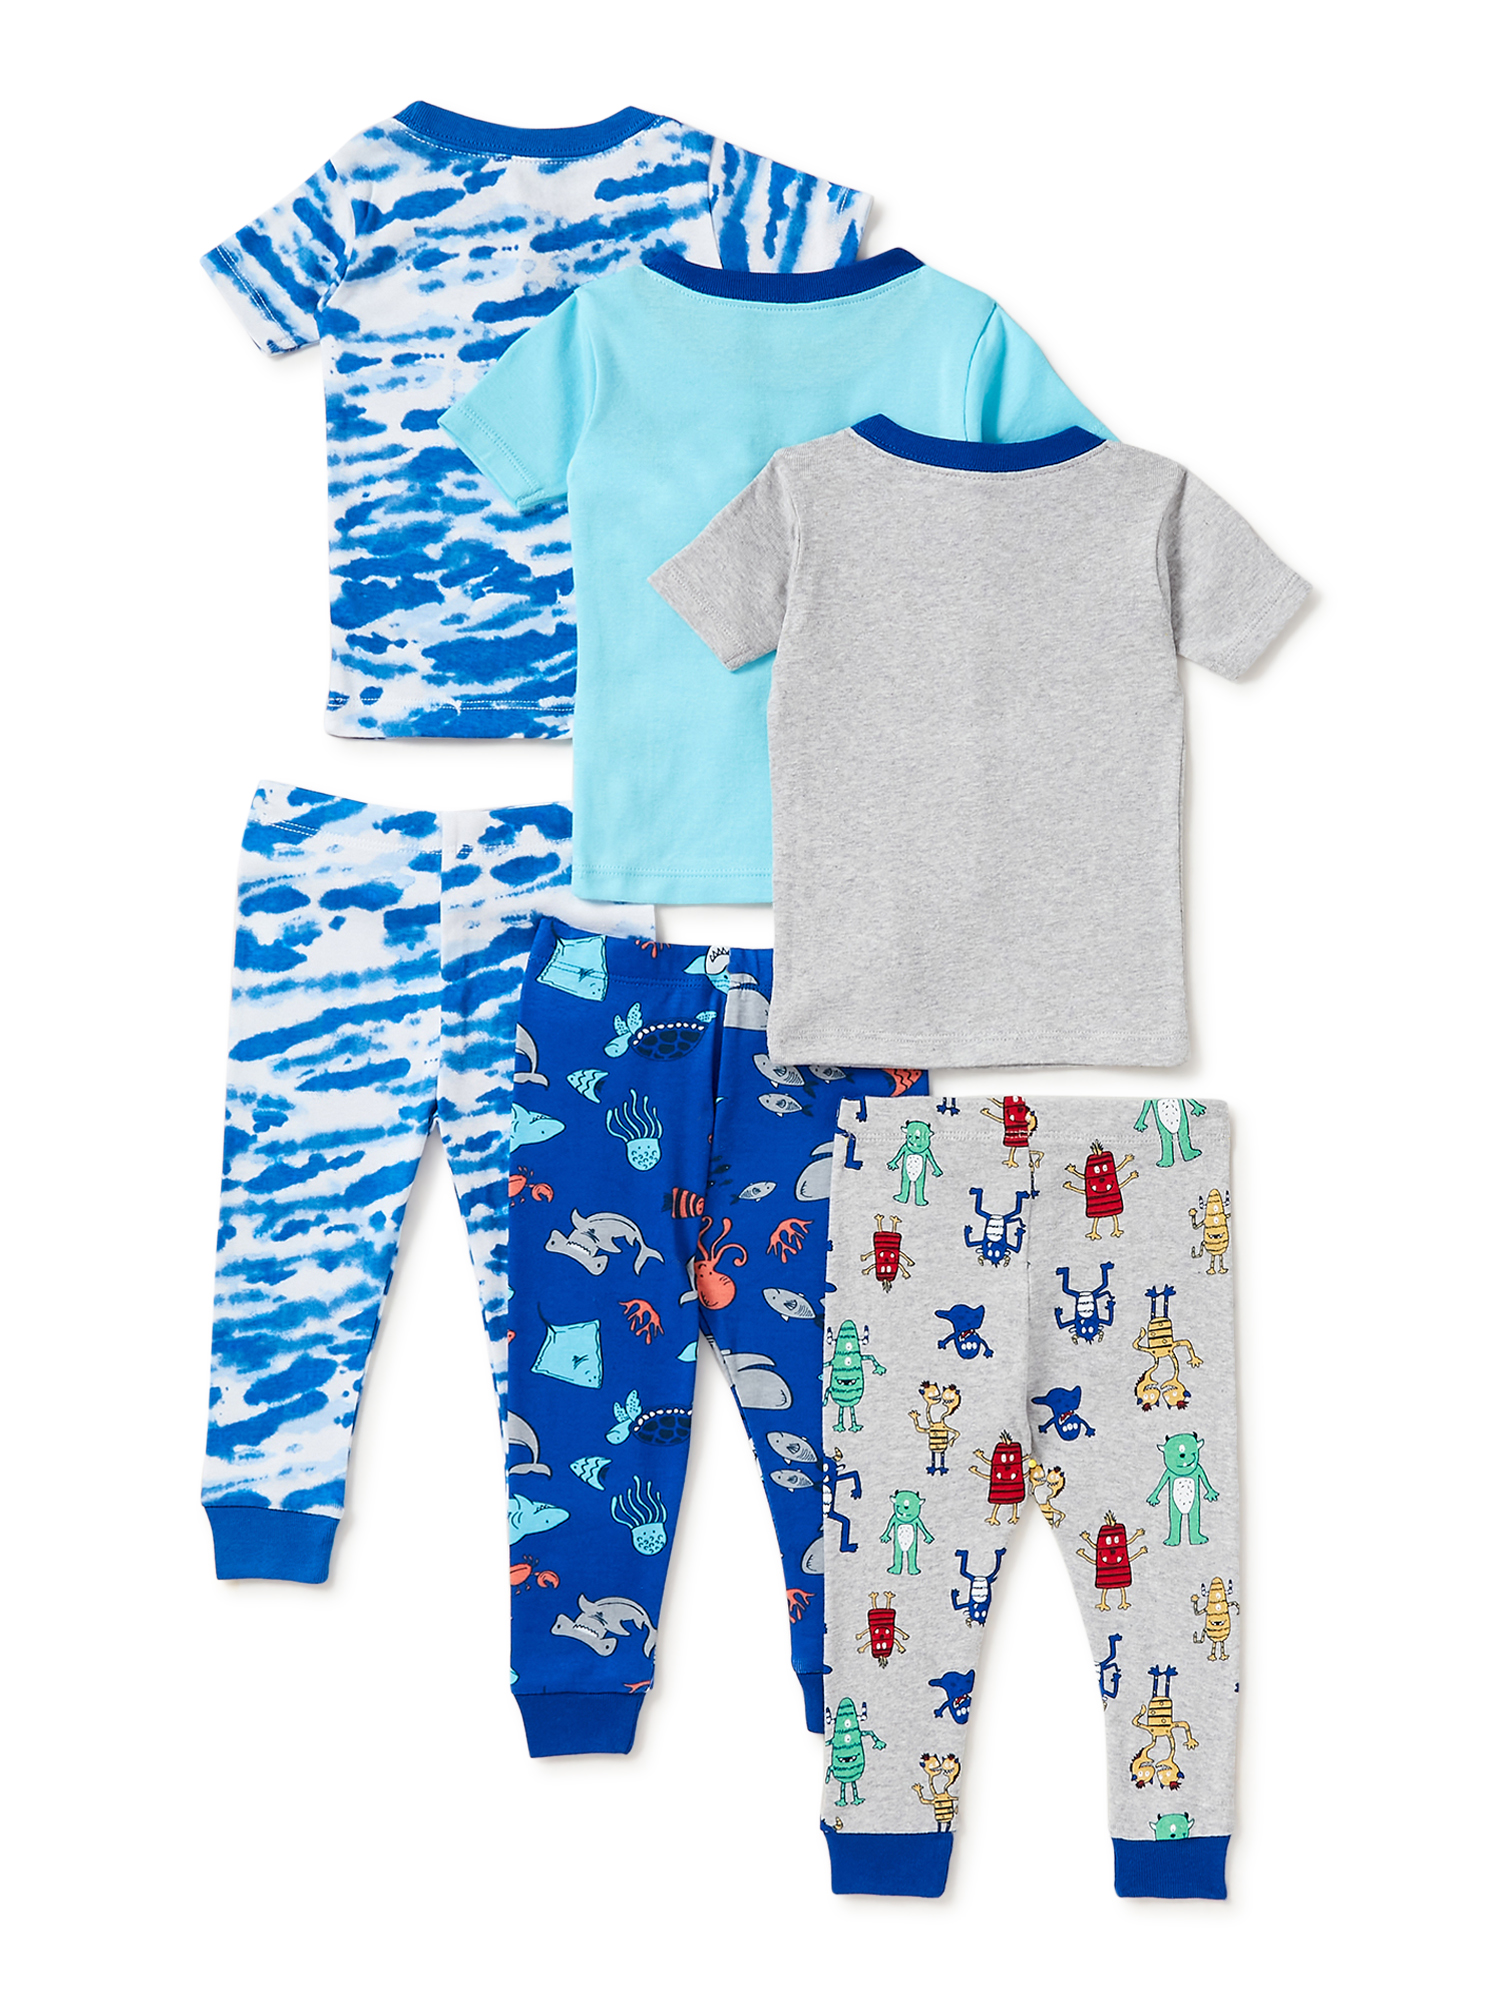 Wonder Nation Short Sleeve Crew Neck Graphic Prints Pajamas (Little Boys or Big Boys) 6 Piece Set - image 2 of 5